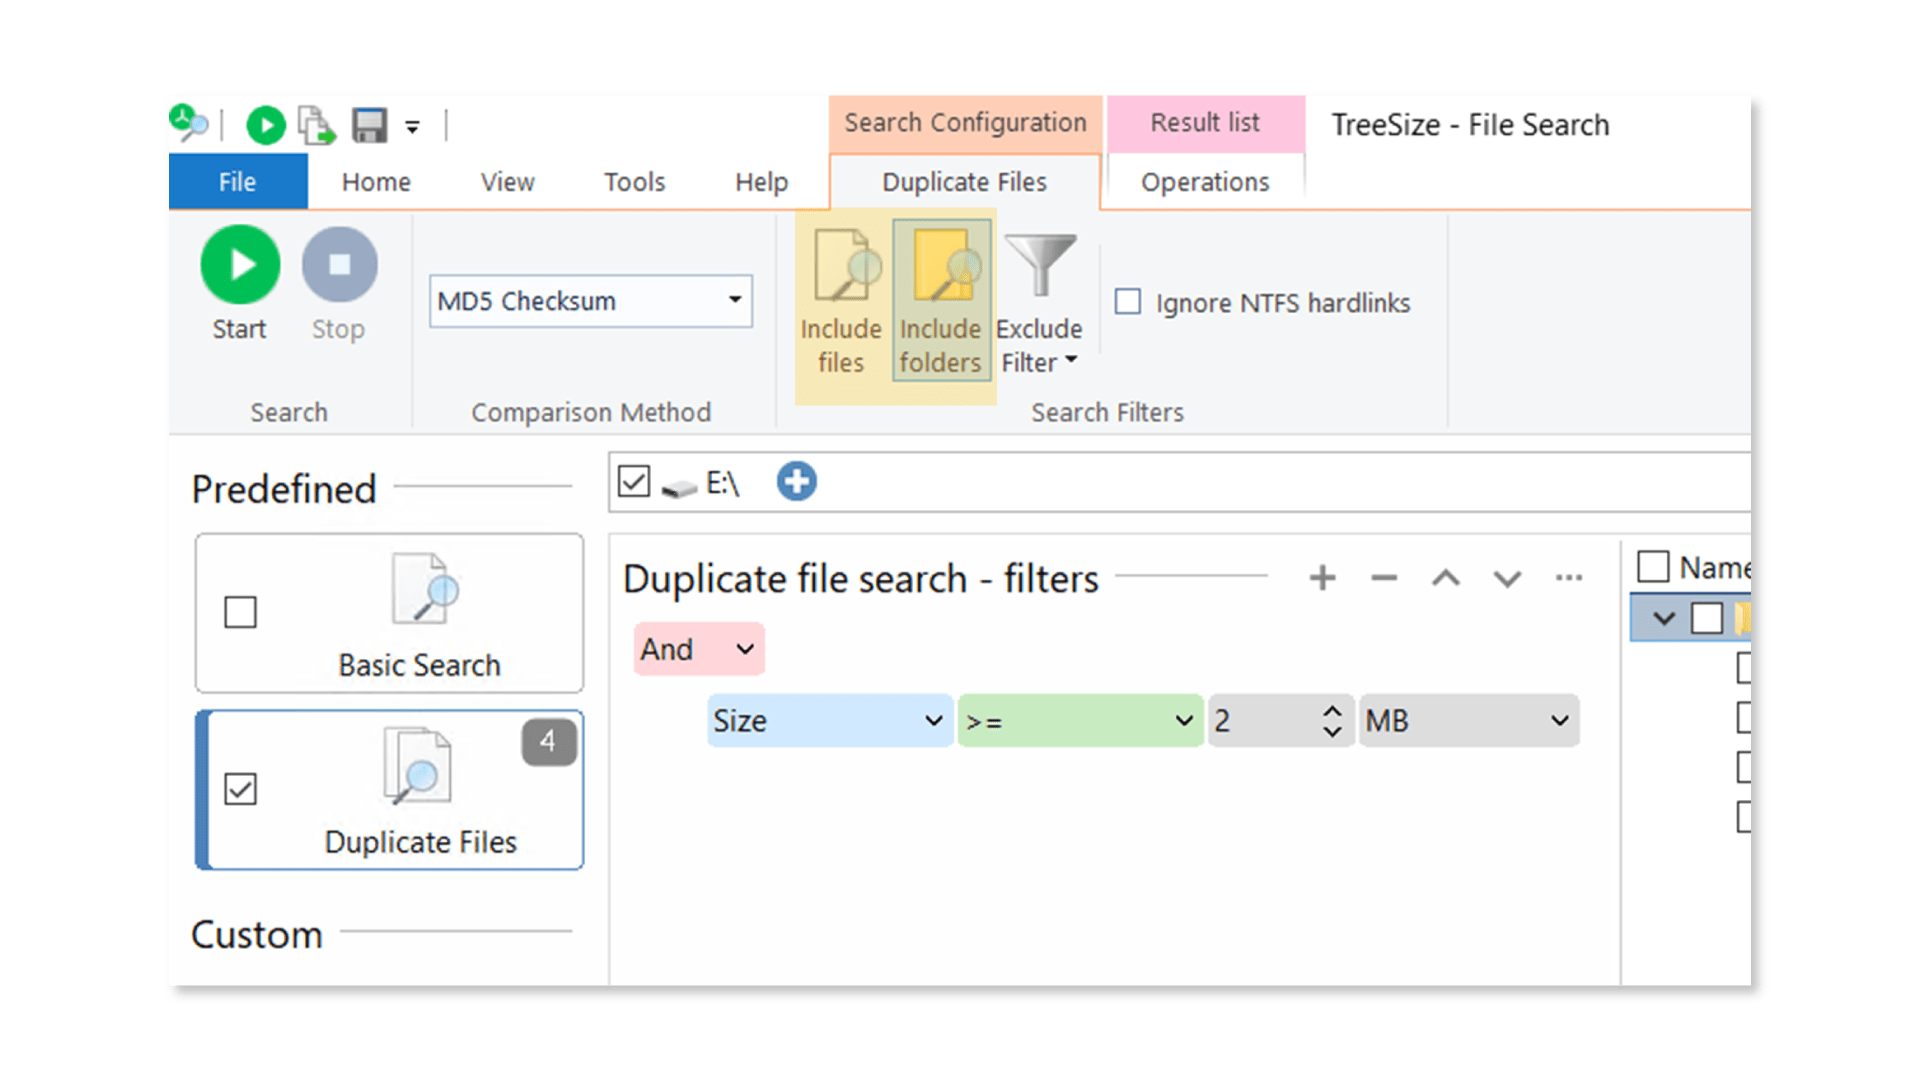 TreeSize Check Duplicate Folder Search